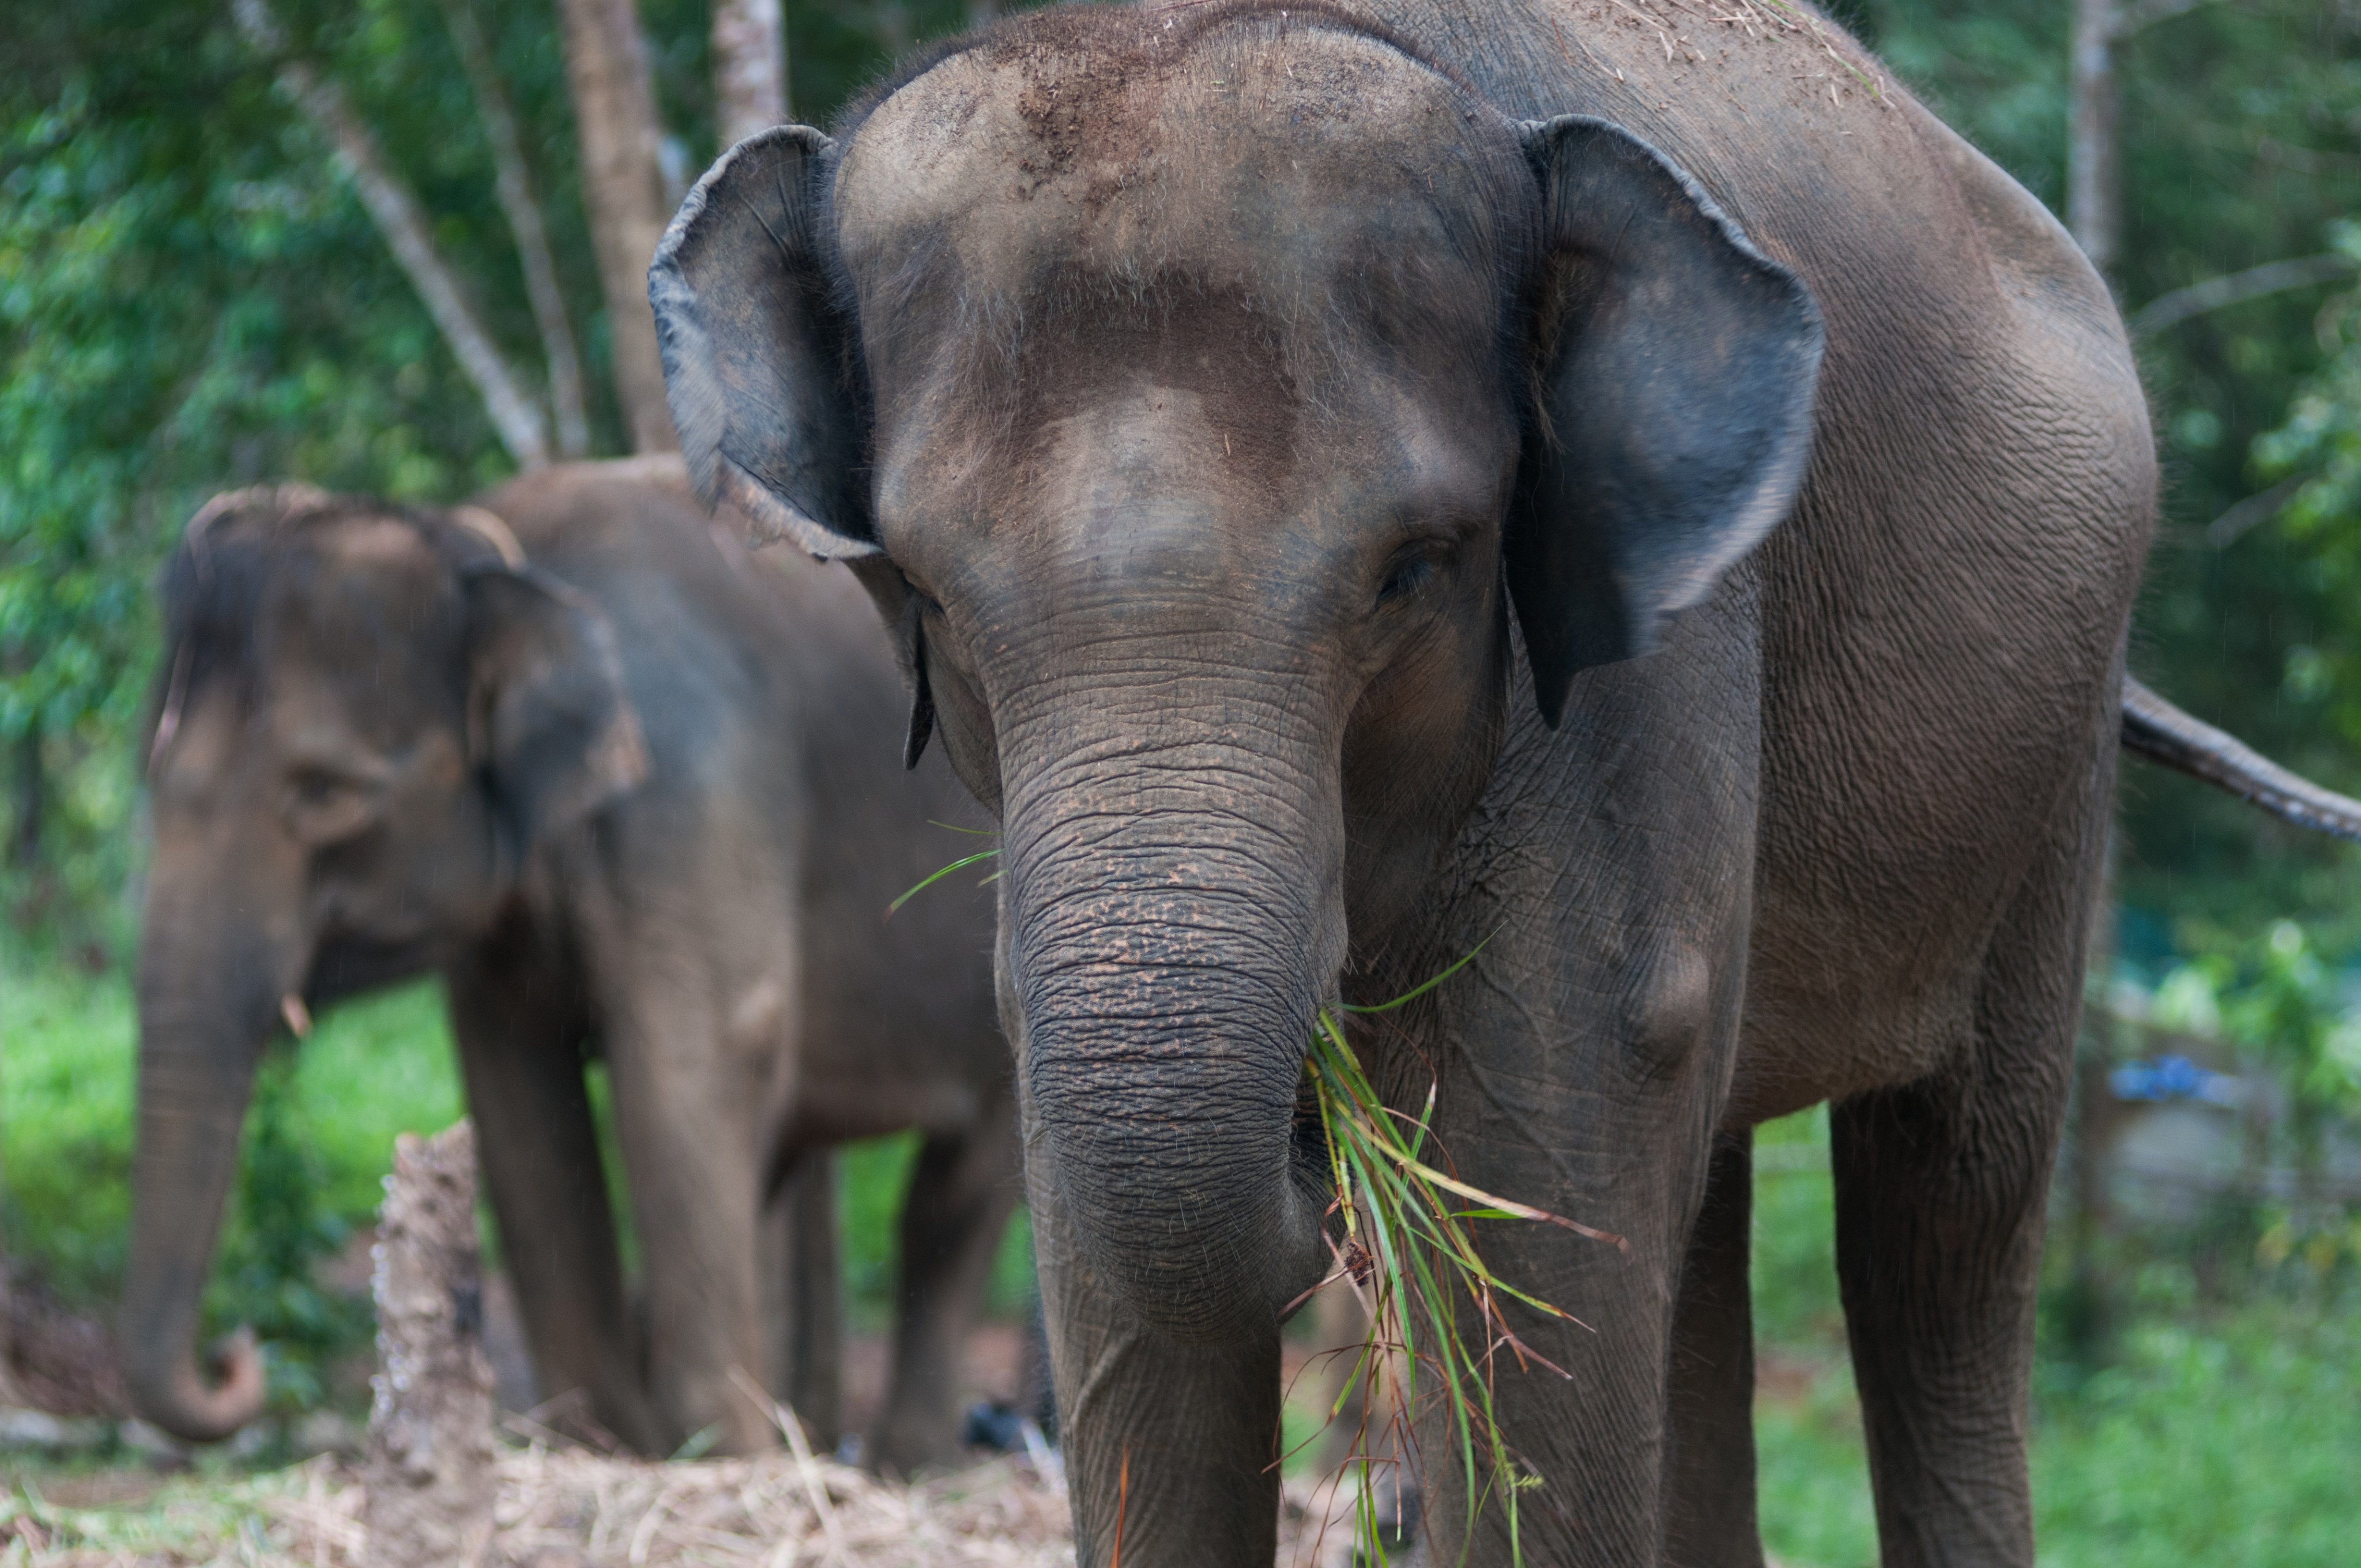 Sumatran elephants are a critically endangered species. 